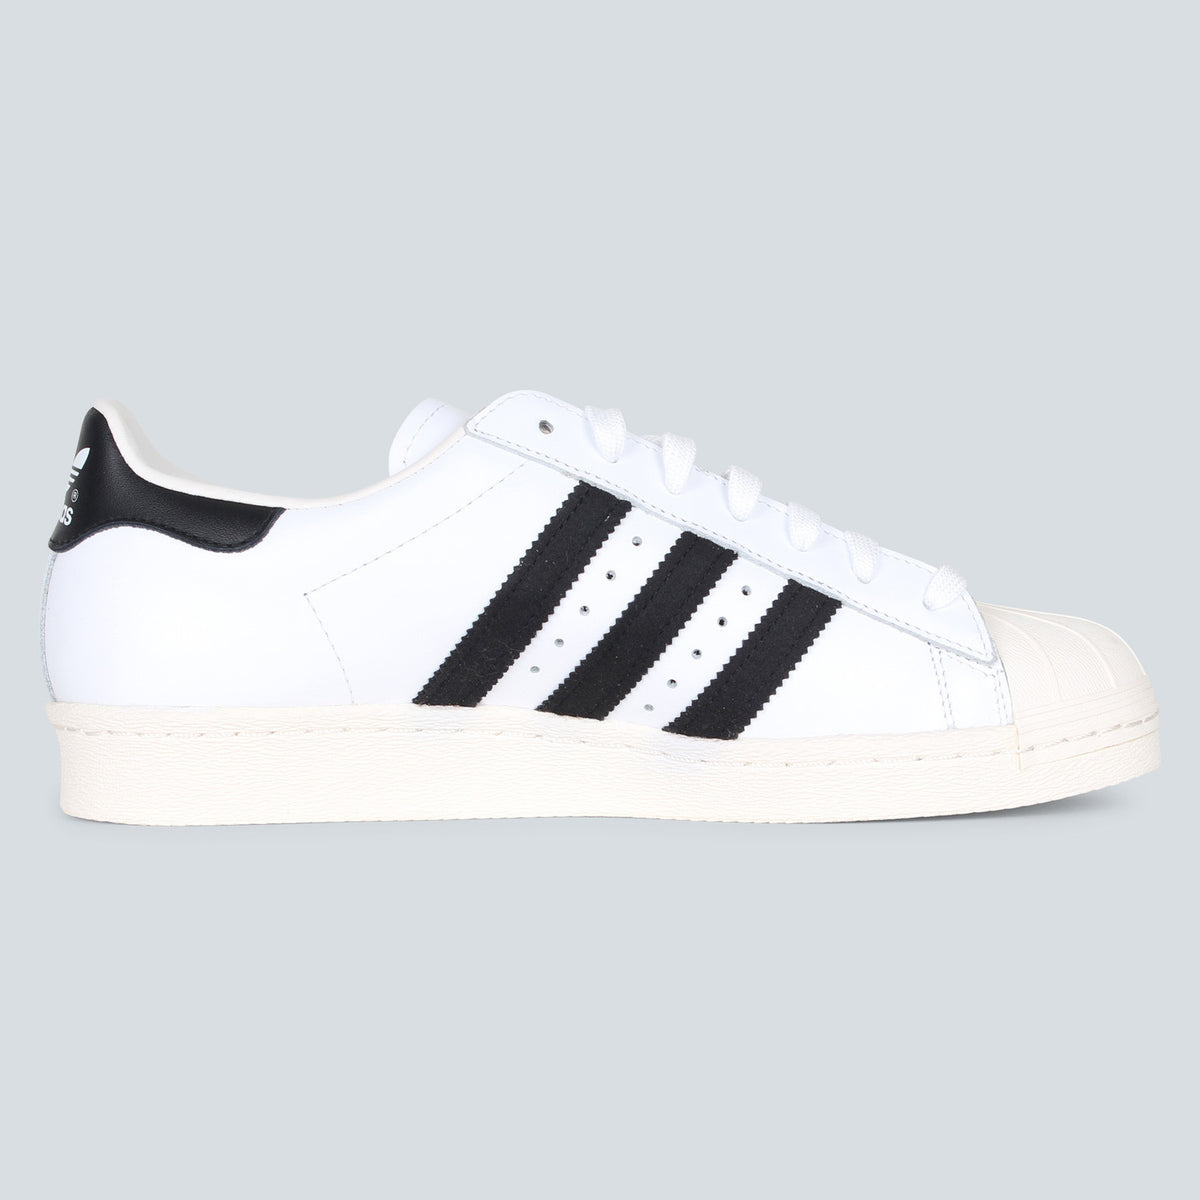 Adidas Originals - Superstar 80's - White / Black